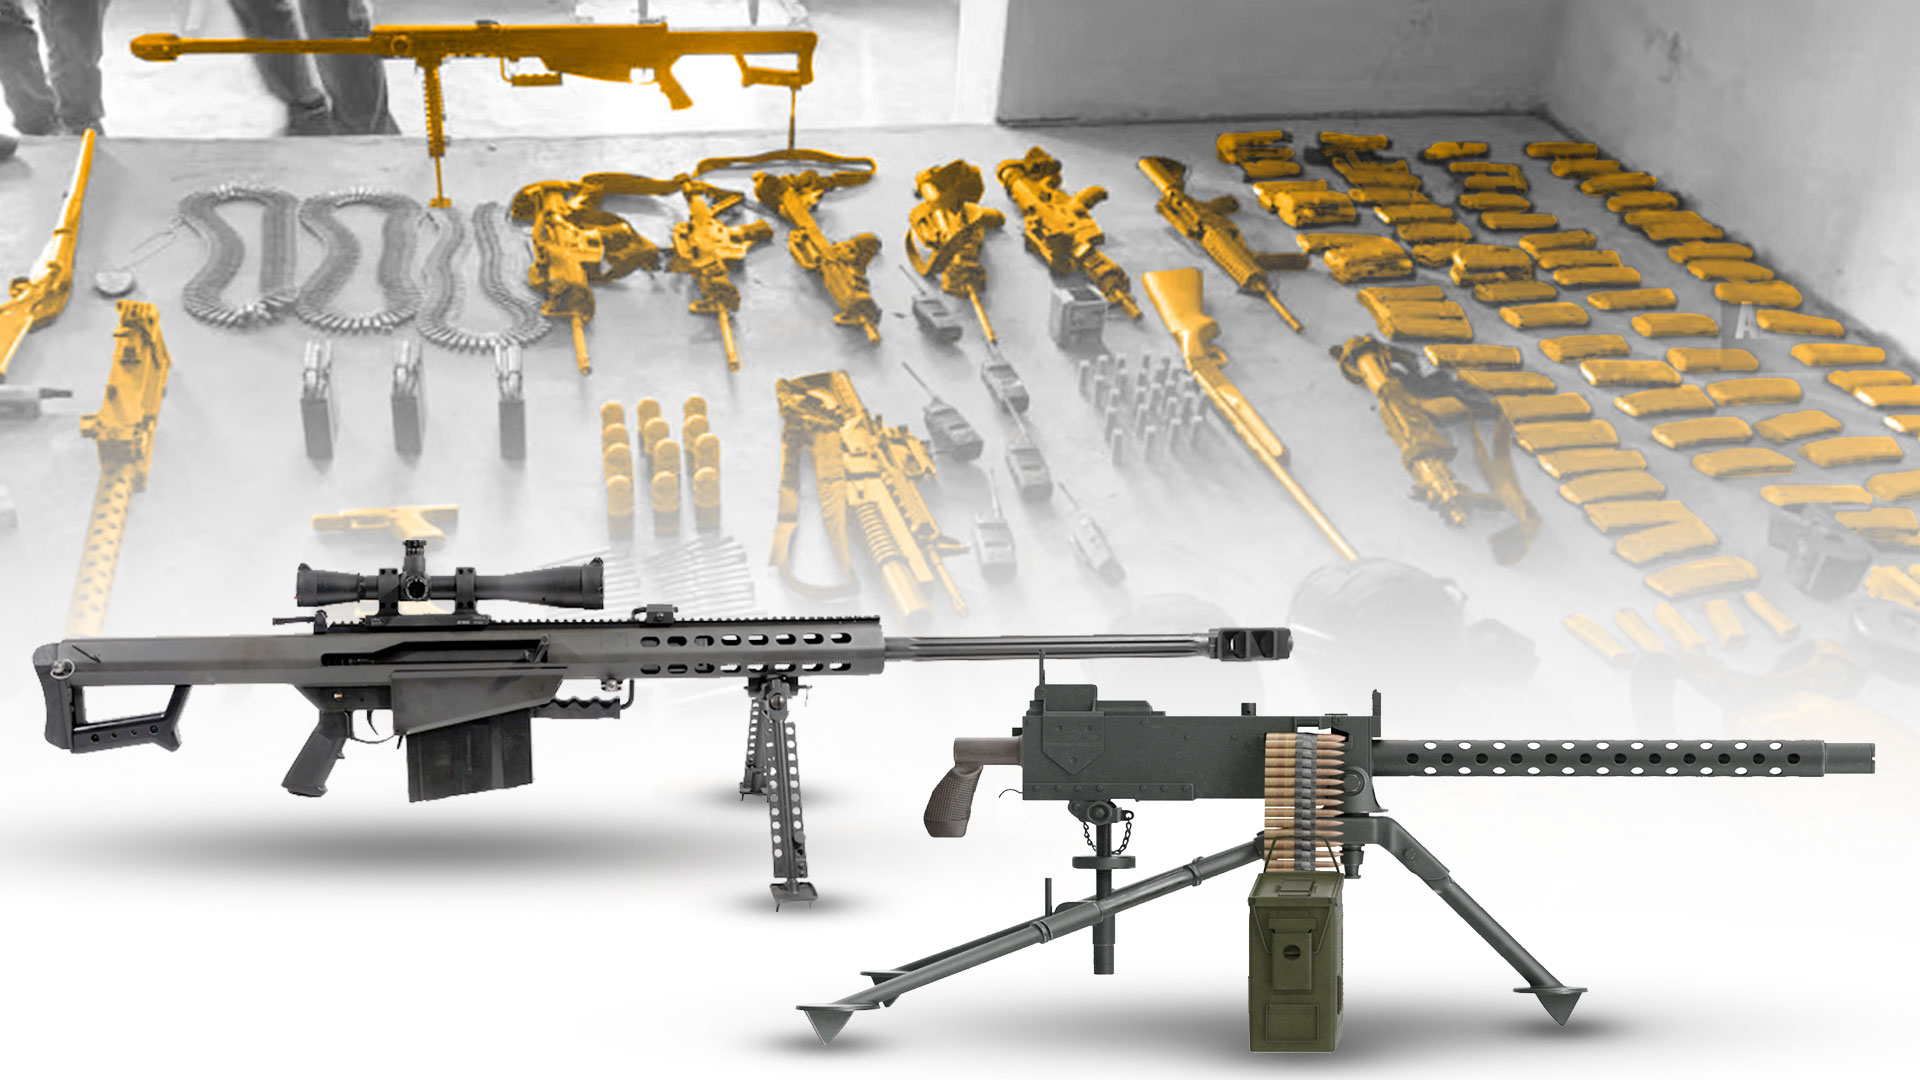 Weapons Seized In Topilejo, Including .50 Barretto